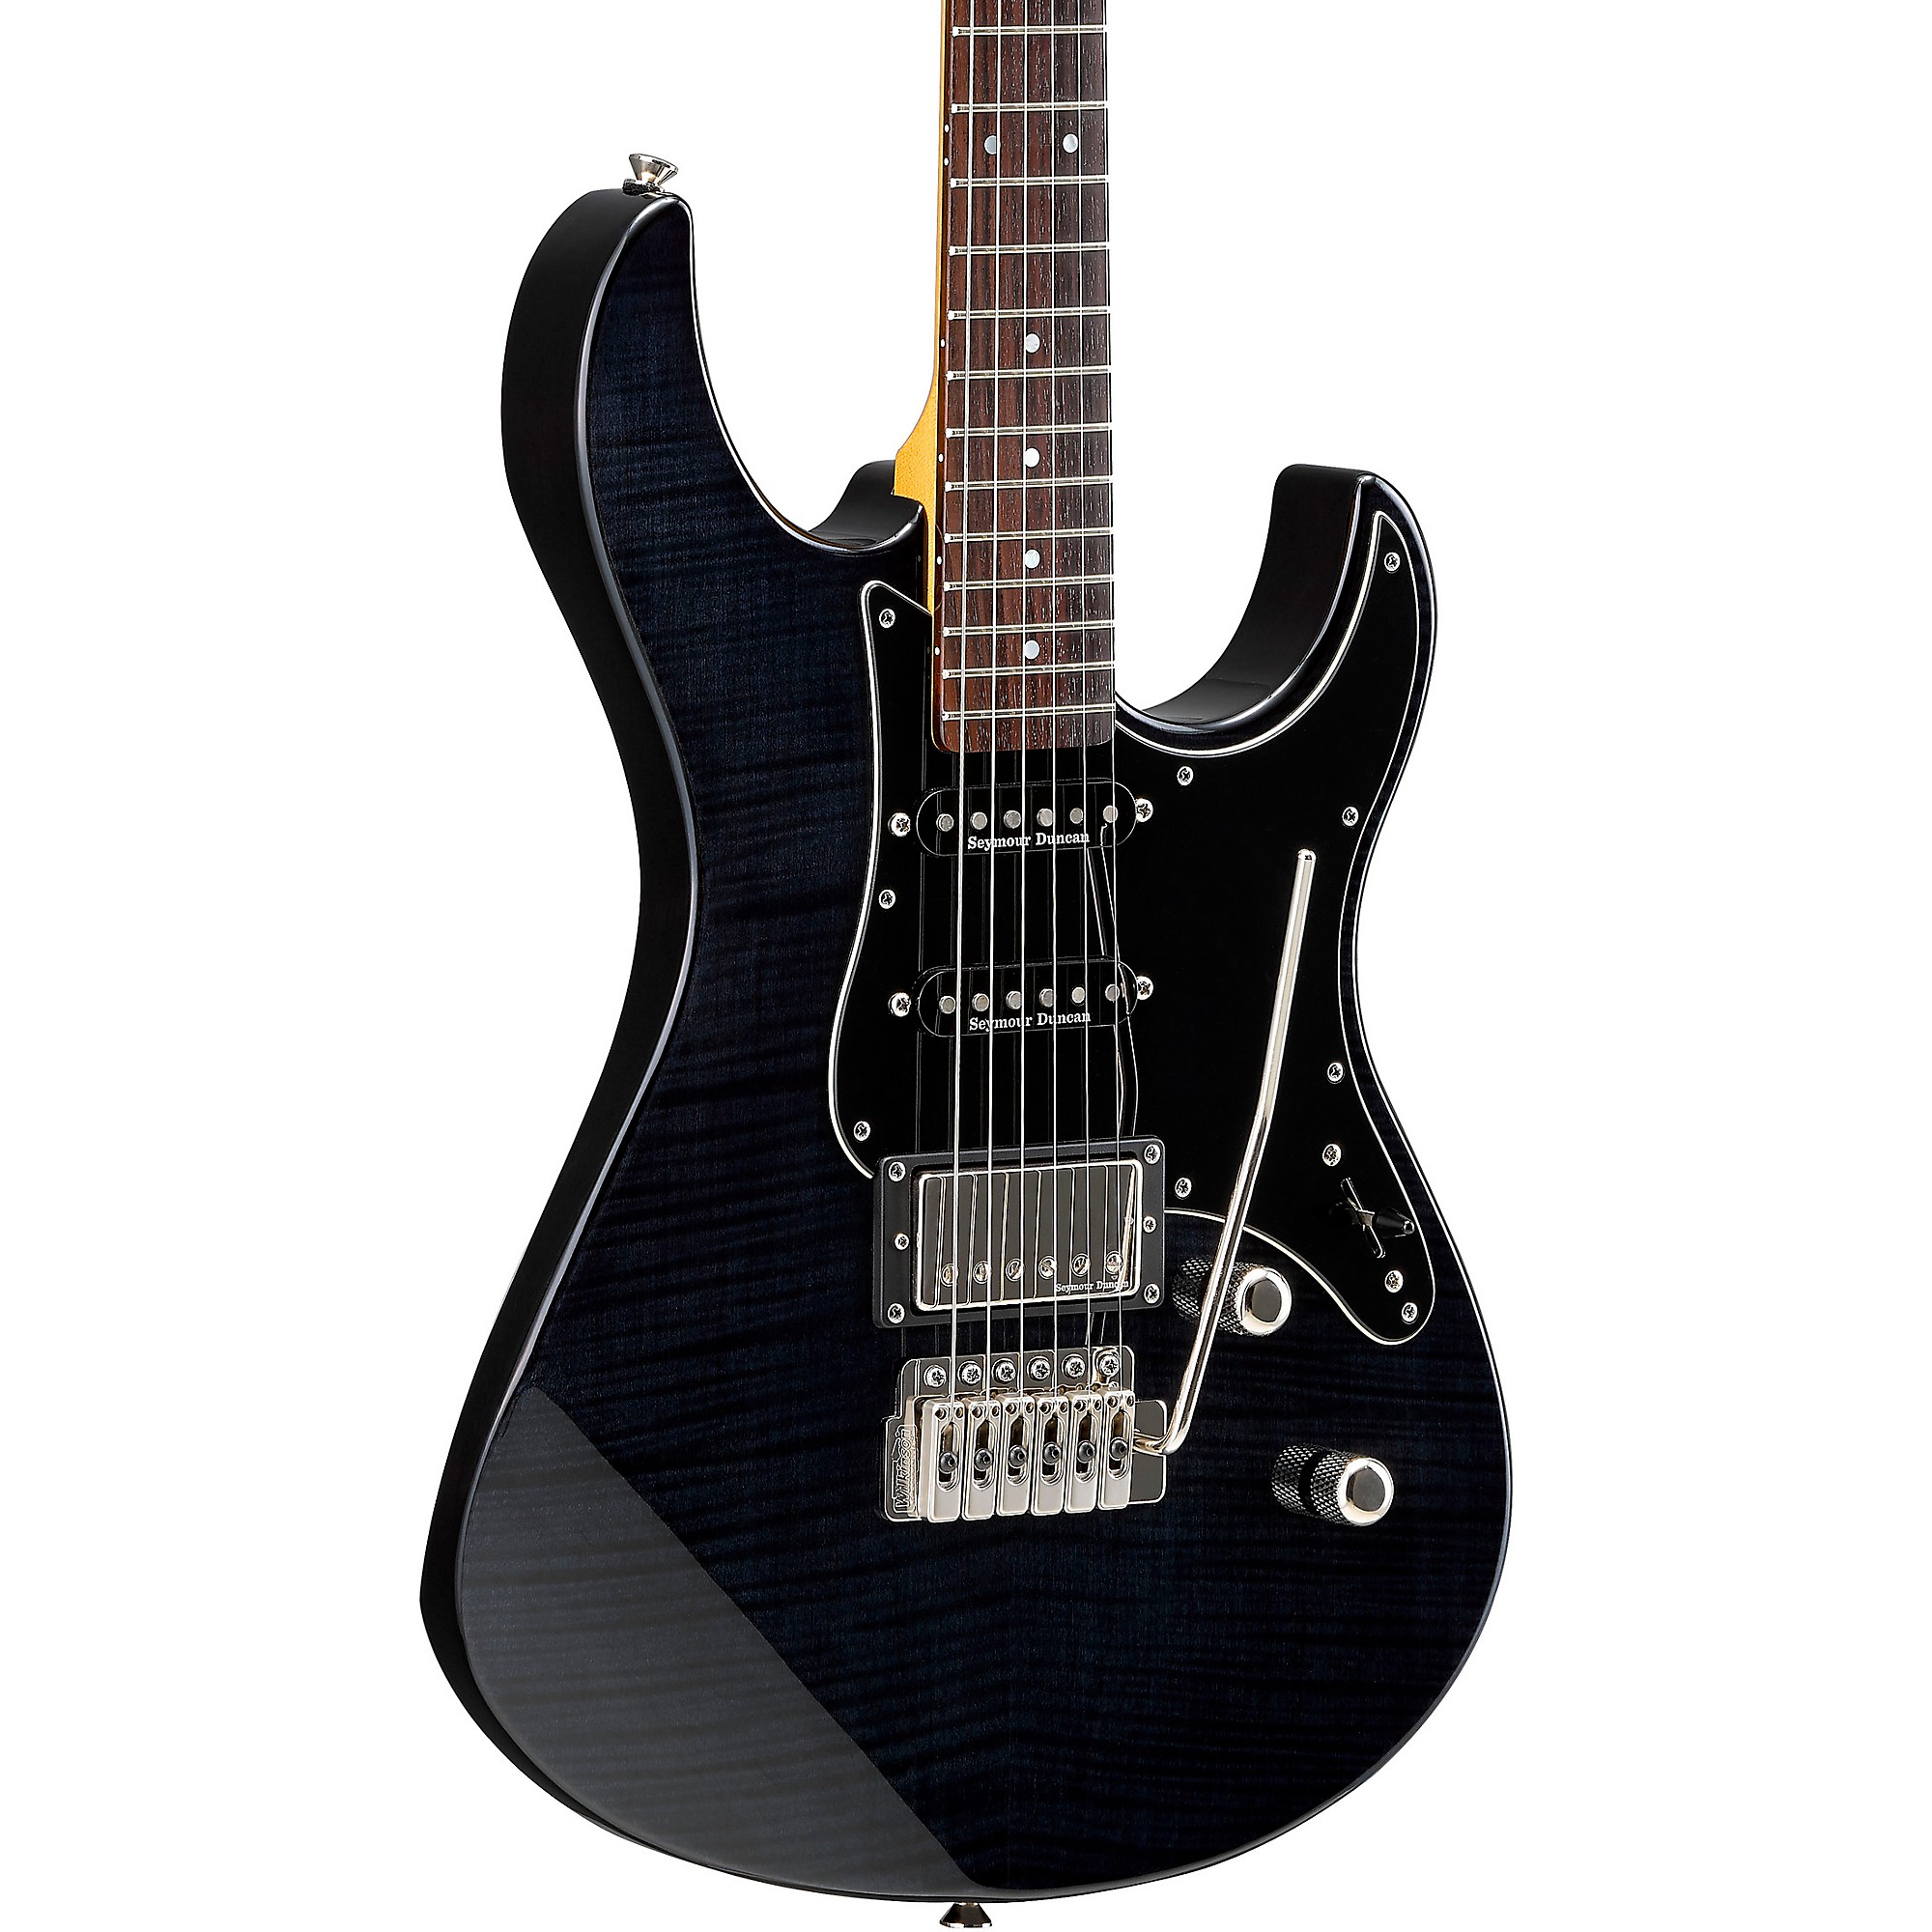 Yamaha Pacifica 612VII Flame Maple Electric Guitar Transparent Black